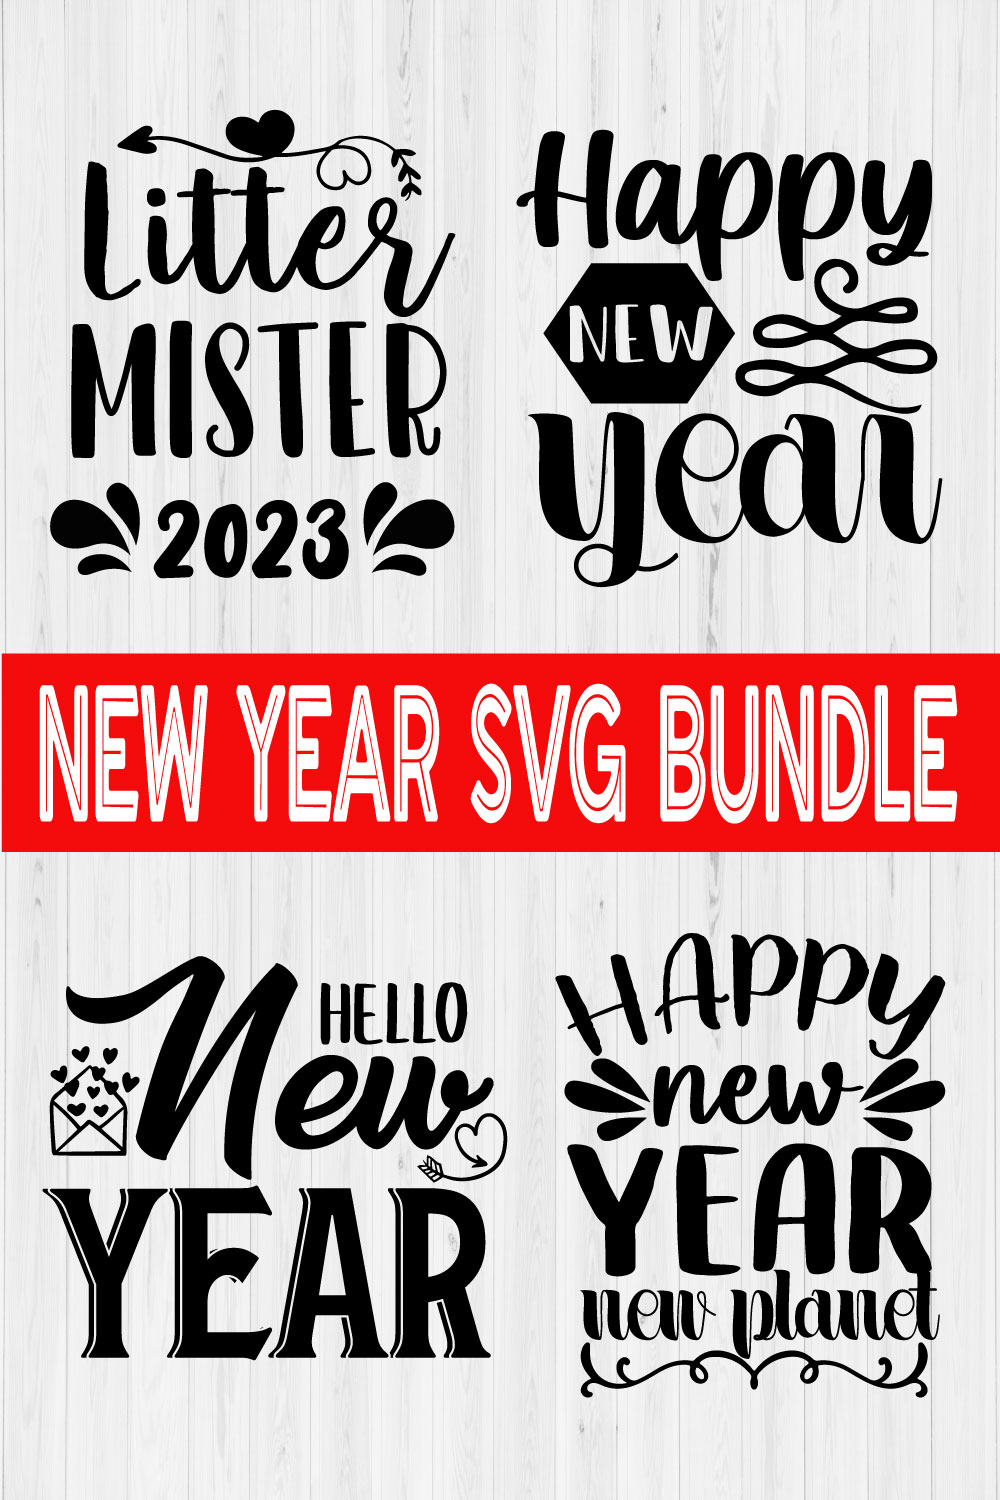 Happy new year Svg Bundle Vol1 pinterest preview image.